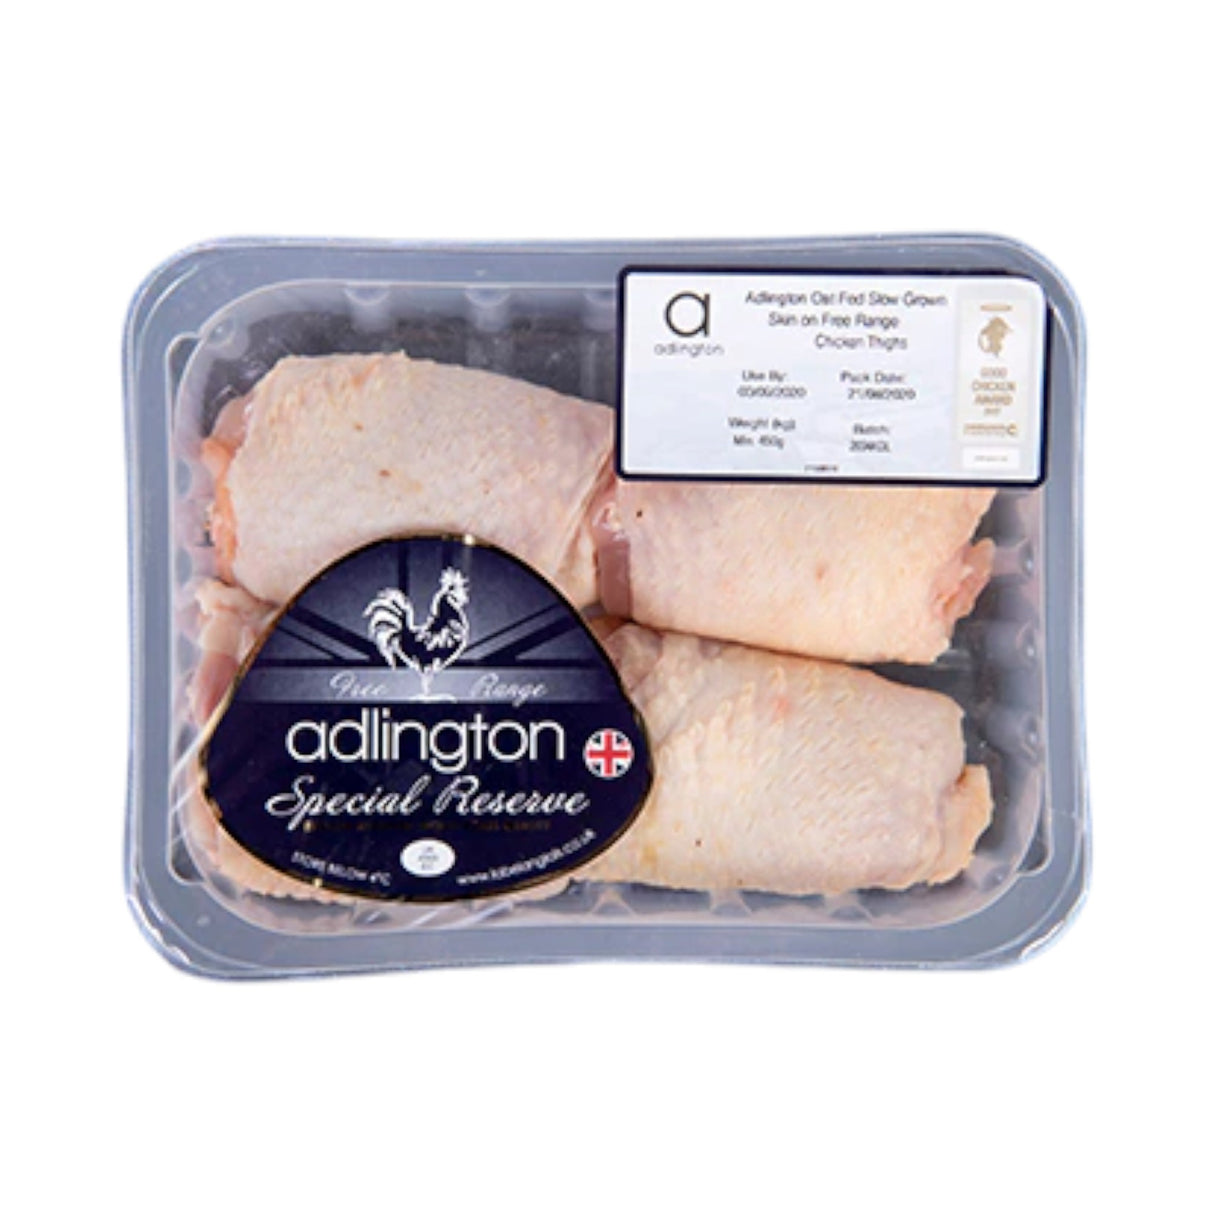 Adlington - English Label - Free Range Skin on Boneless Chicken Thighs (4 Thighs)